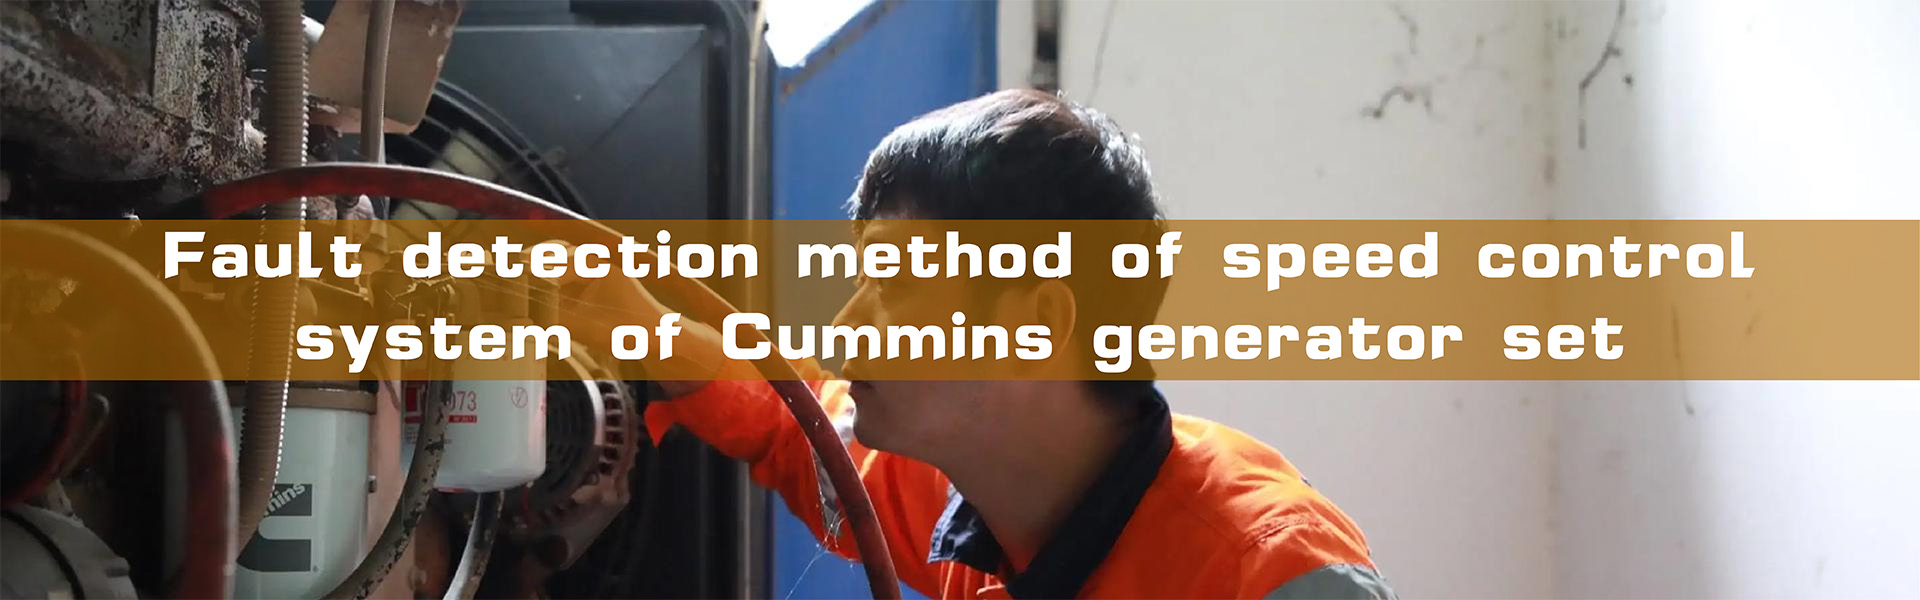 Fault detection method of speed control system of Cummins generator set